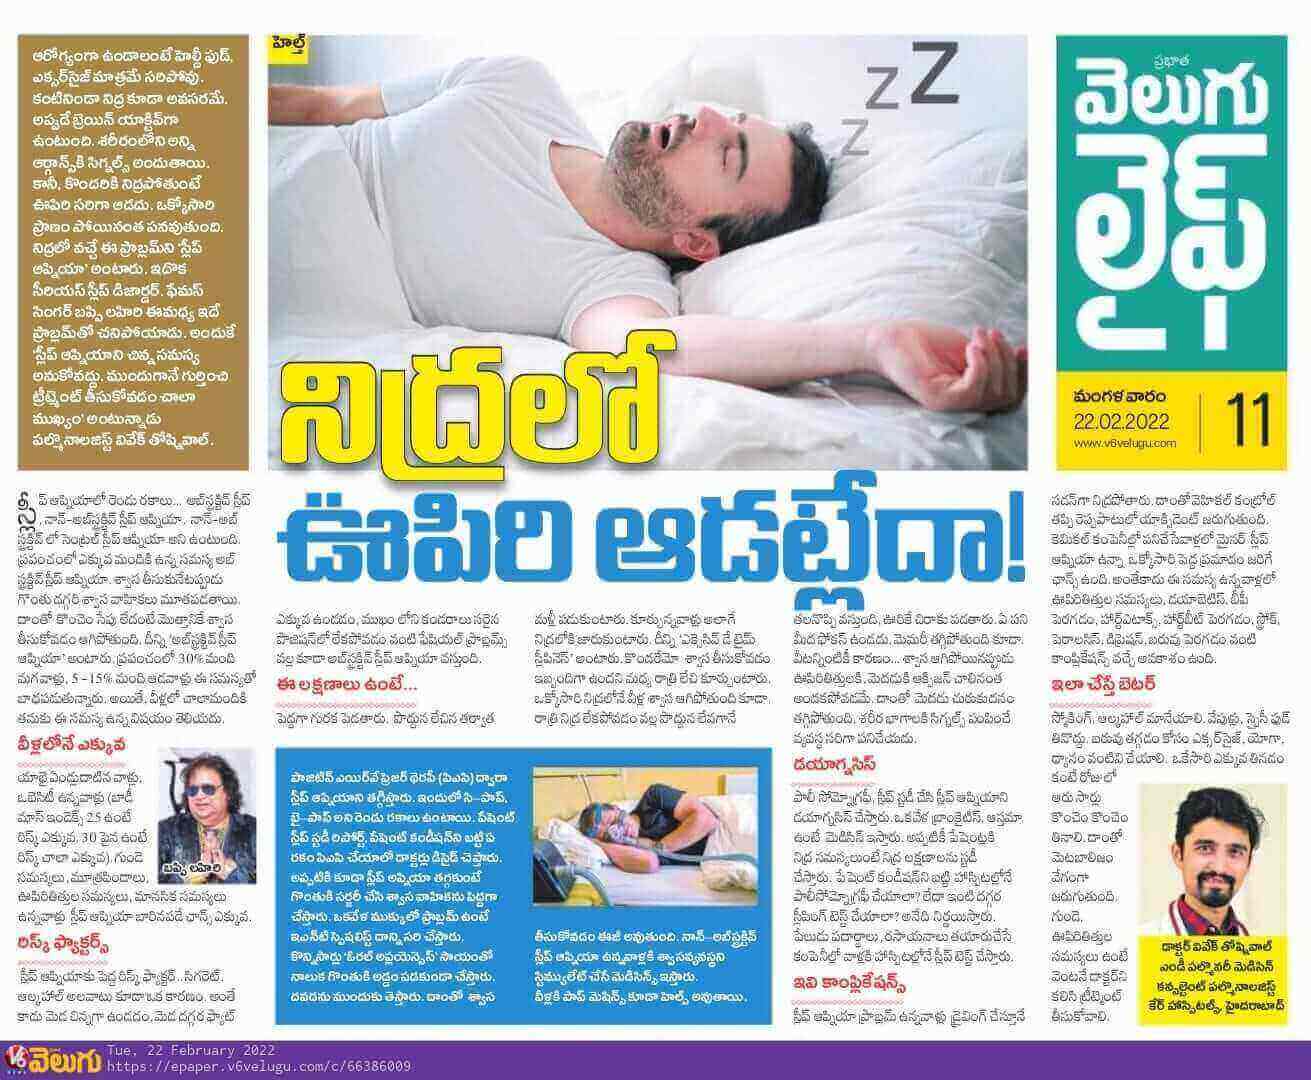 Article on Sleep Apnea by Dr. Vivek Toshinwal - Consultant Pulmonologist